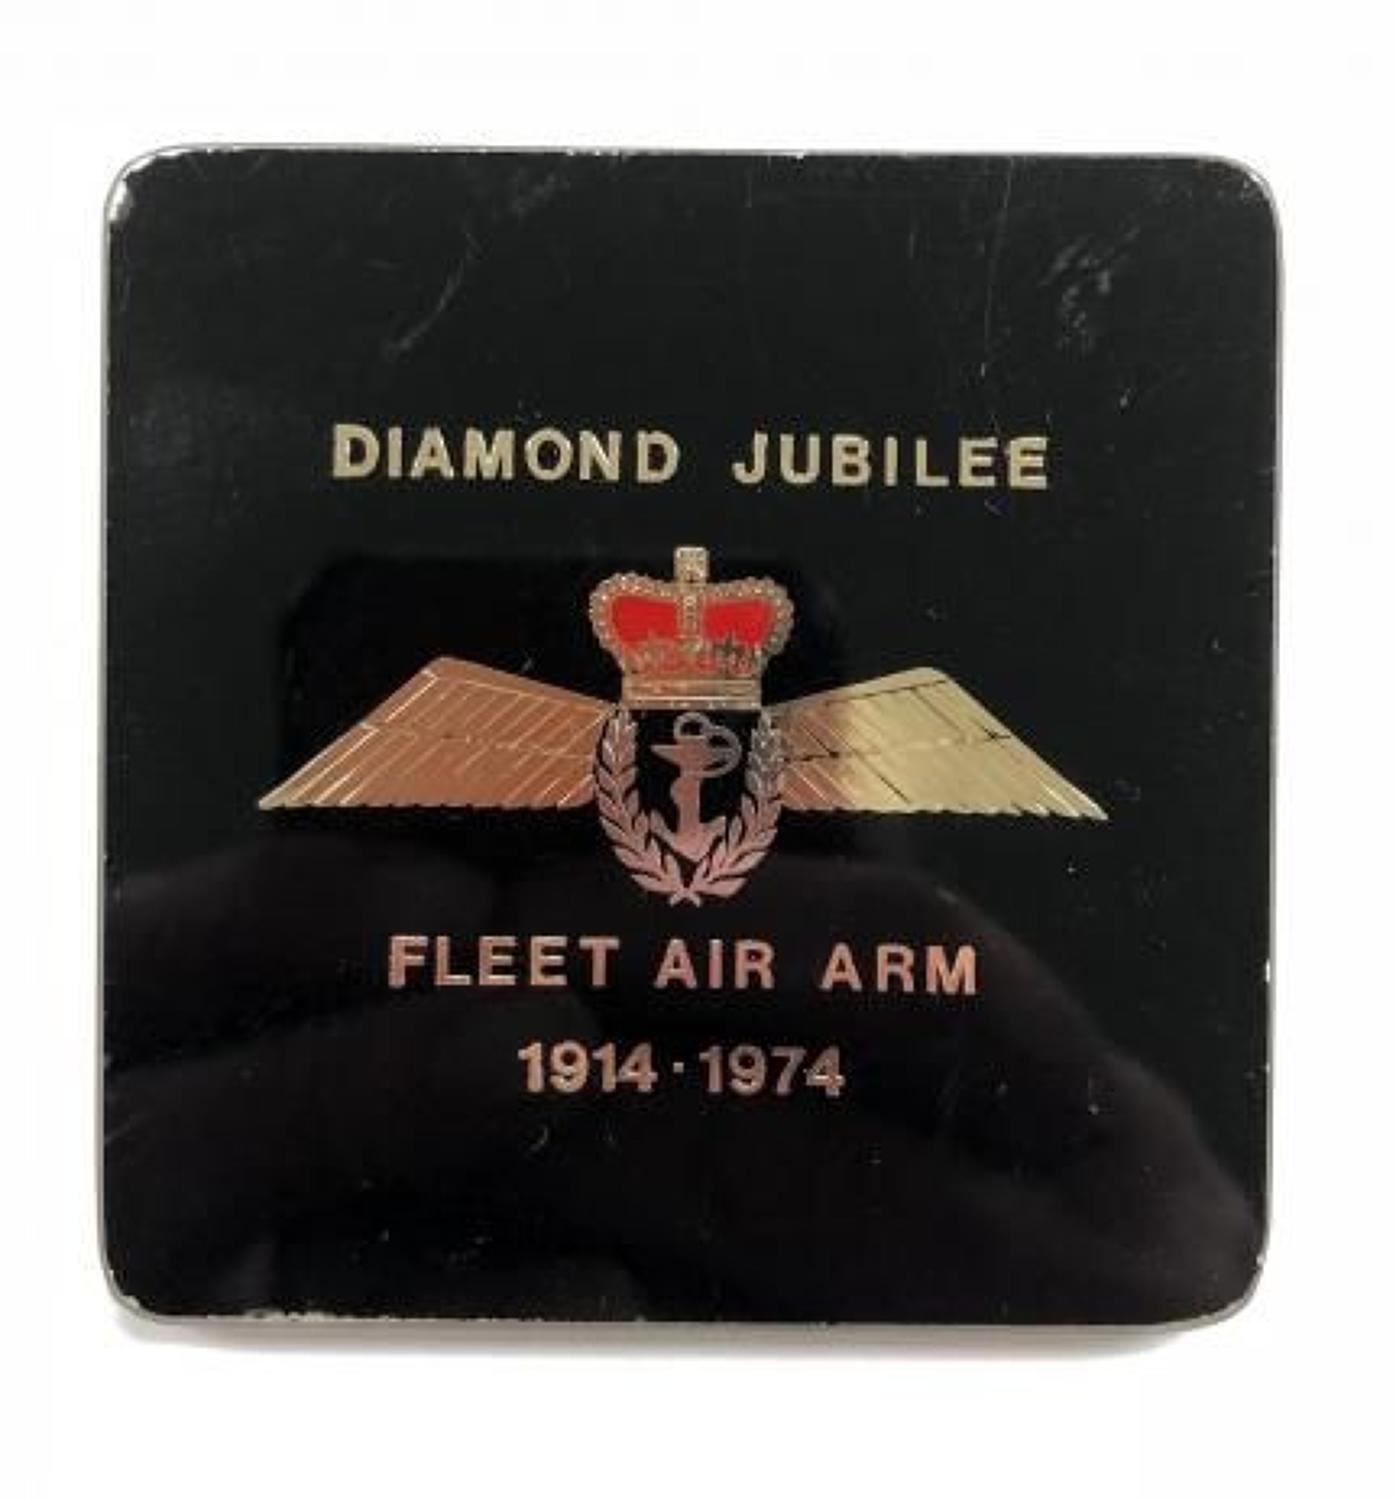 WW2 Fleet Air Arm Diamond Jubilee Cup Coaster Pilots Wings.